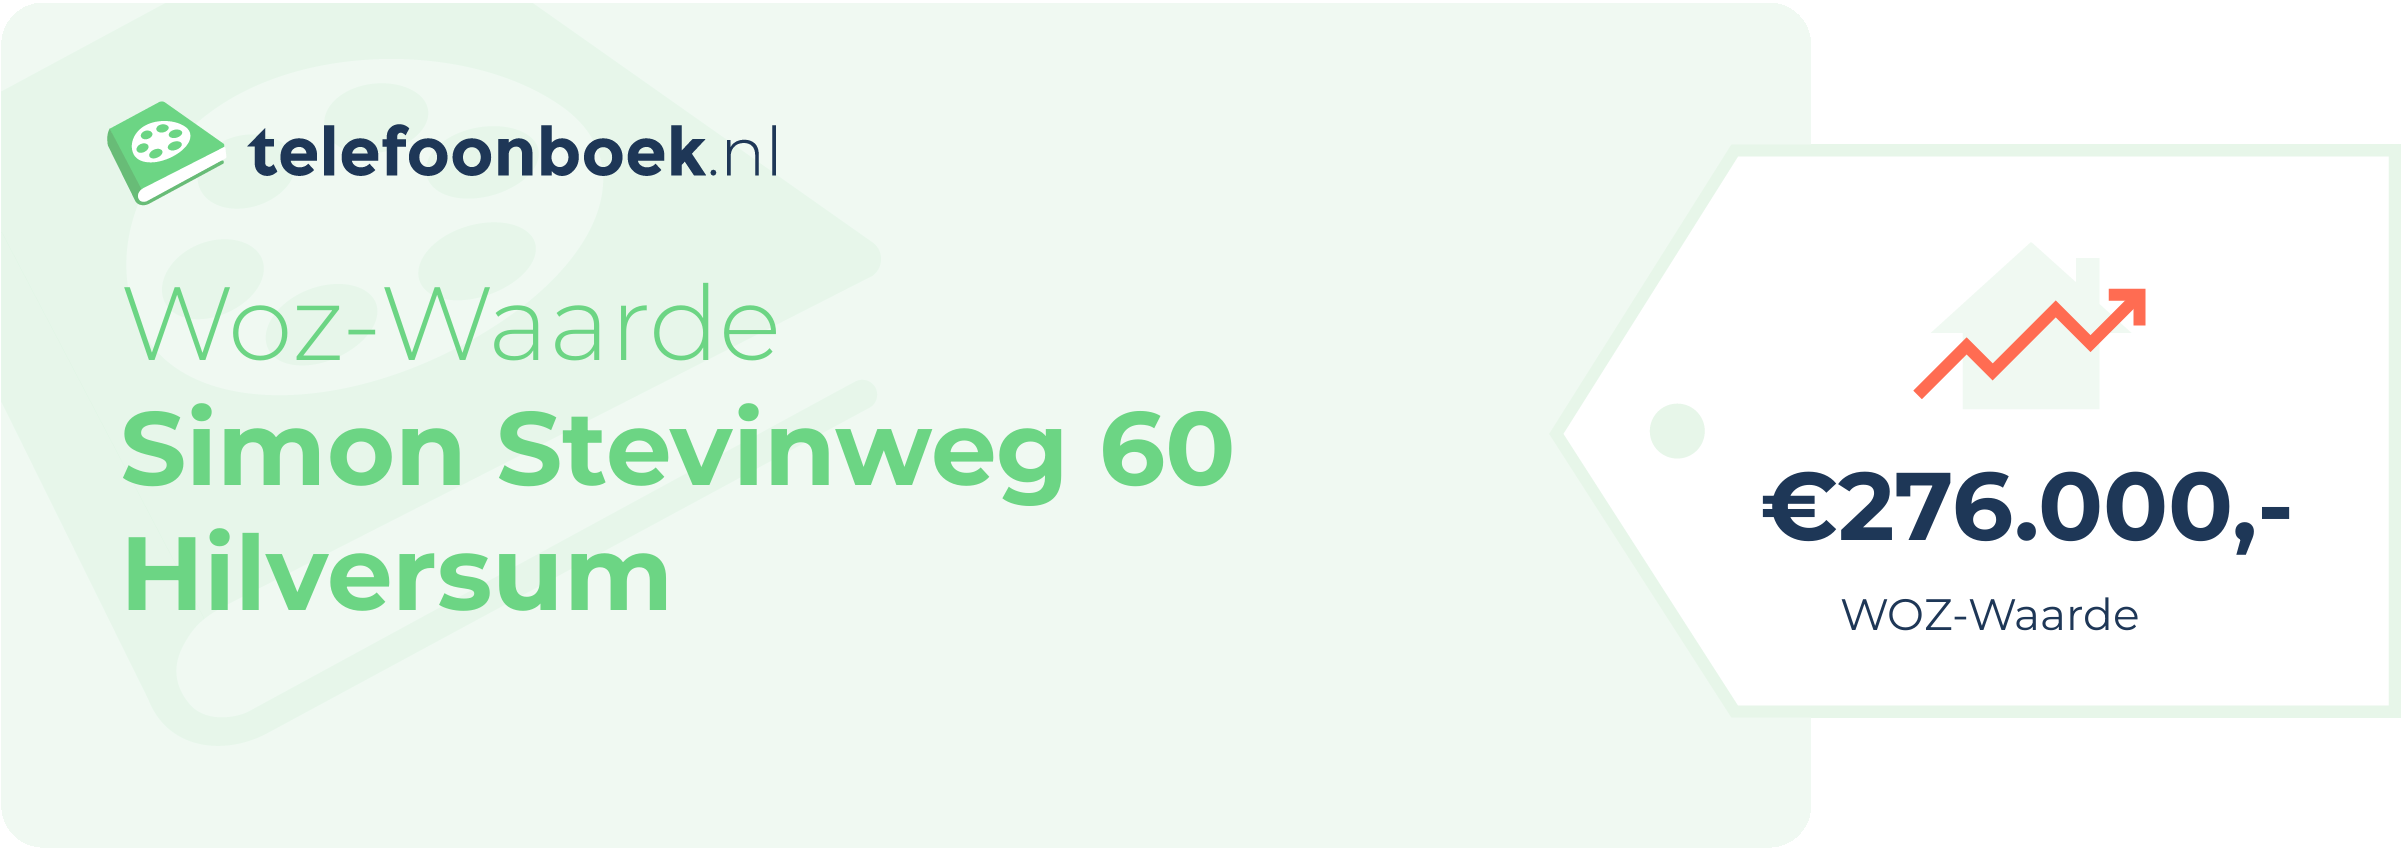 WOZ-waarde Simon Stevinweg 60 Hilversum